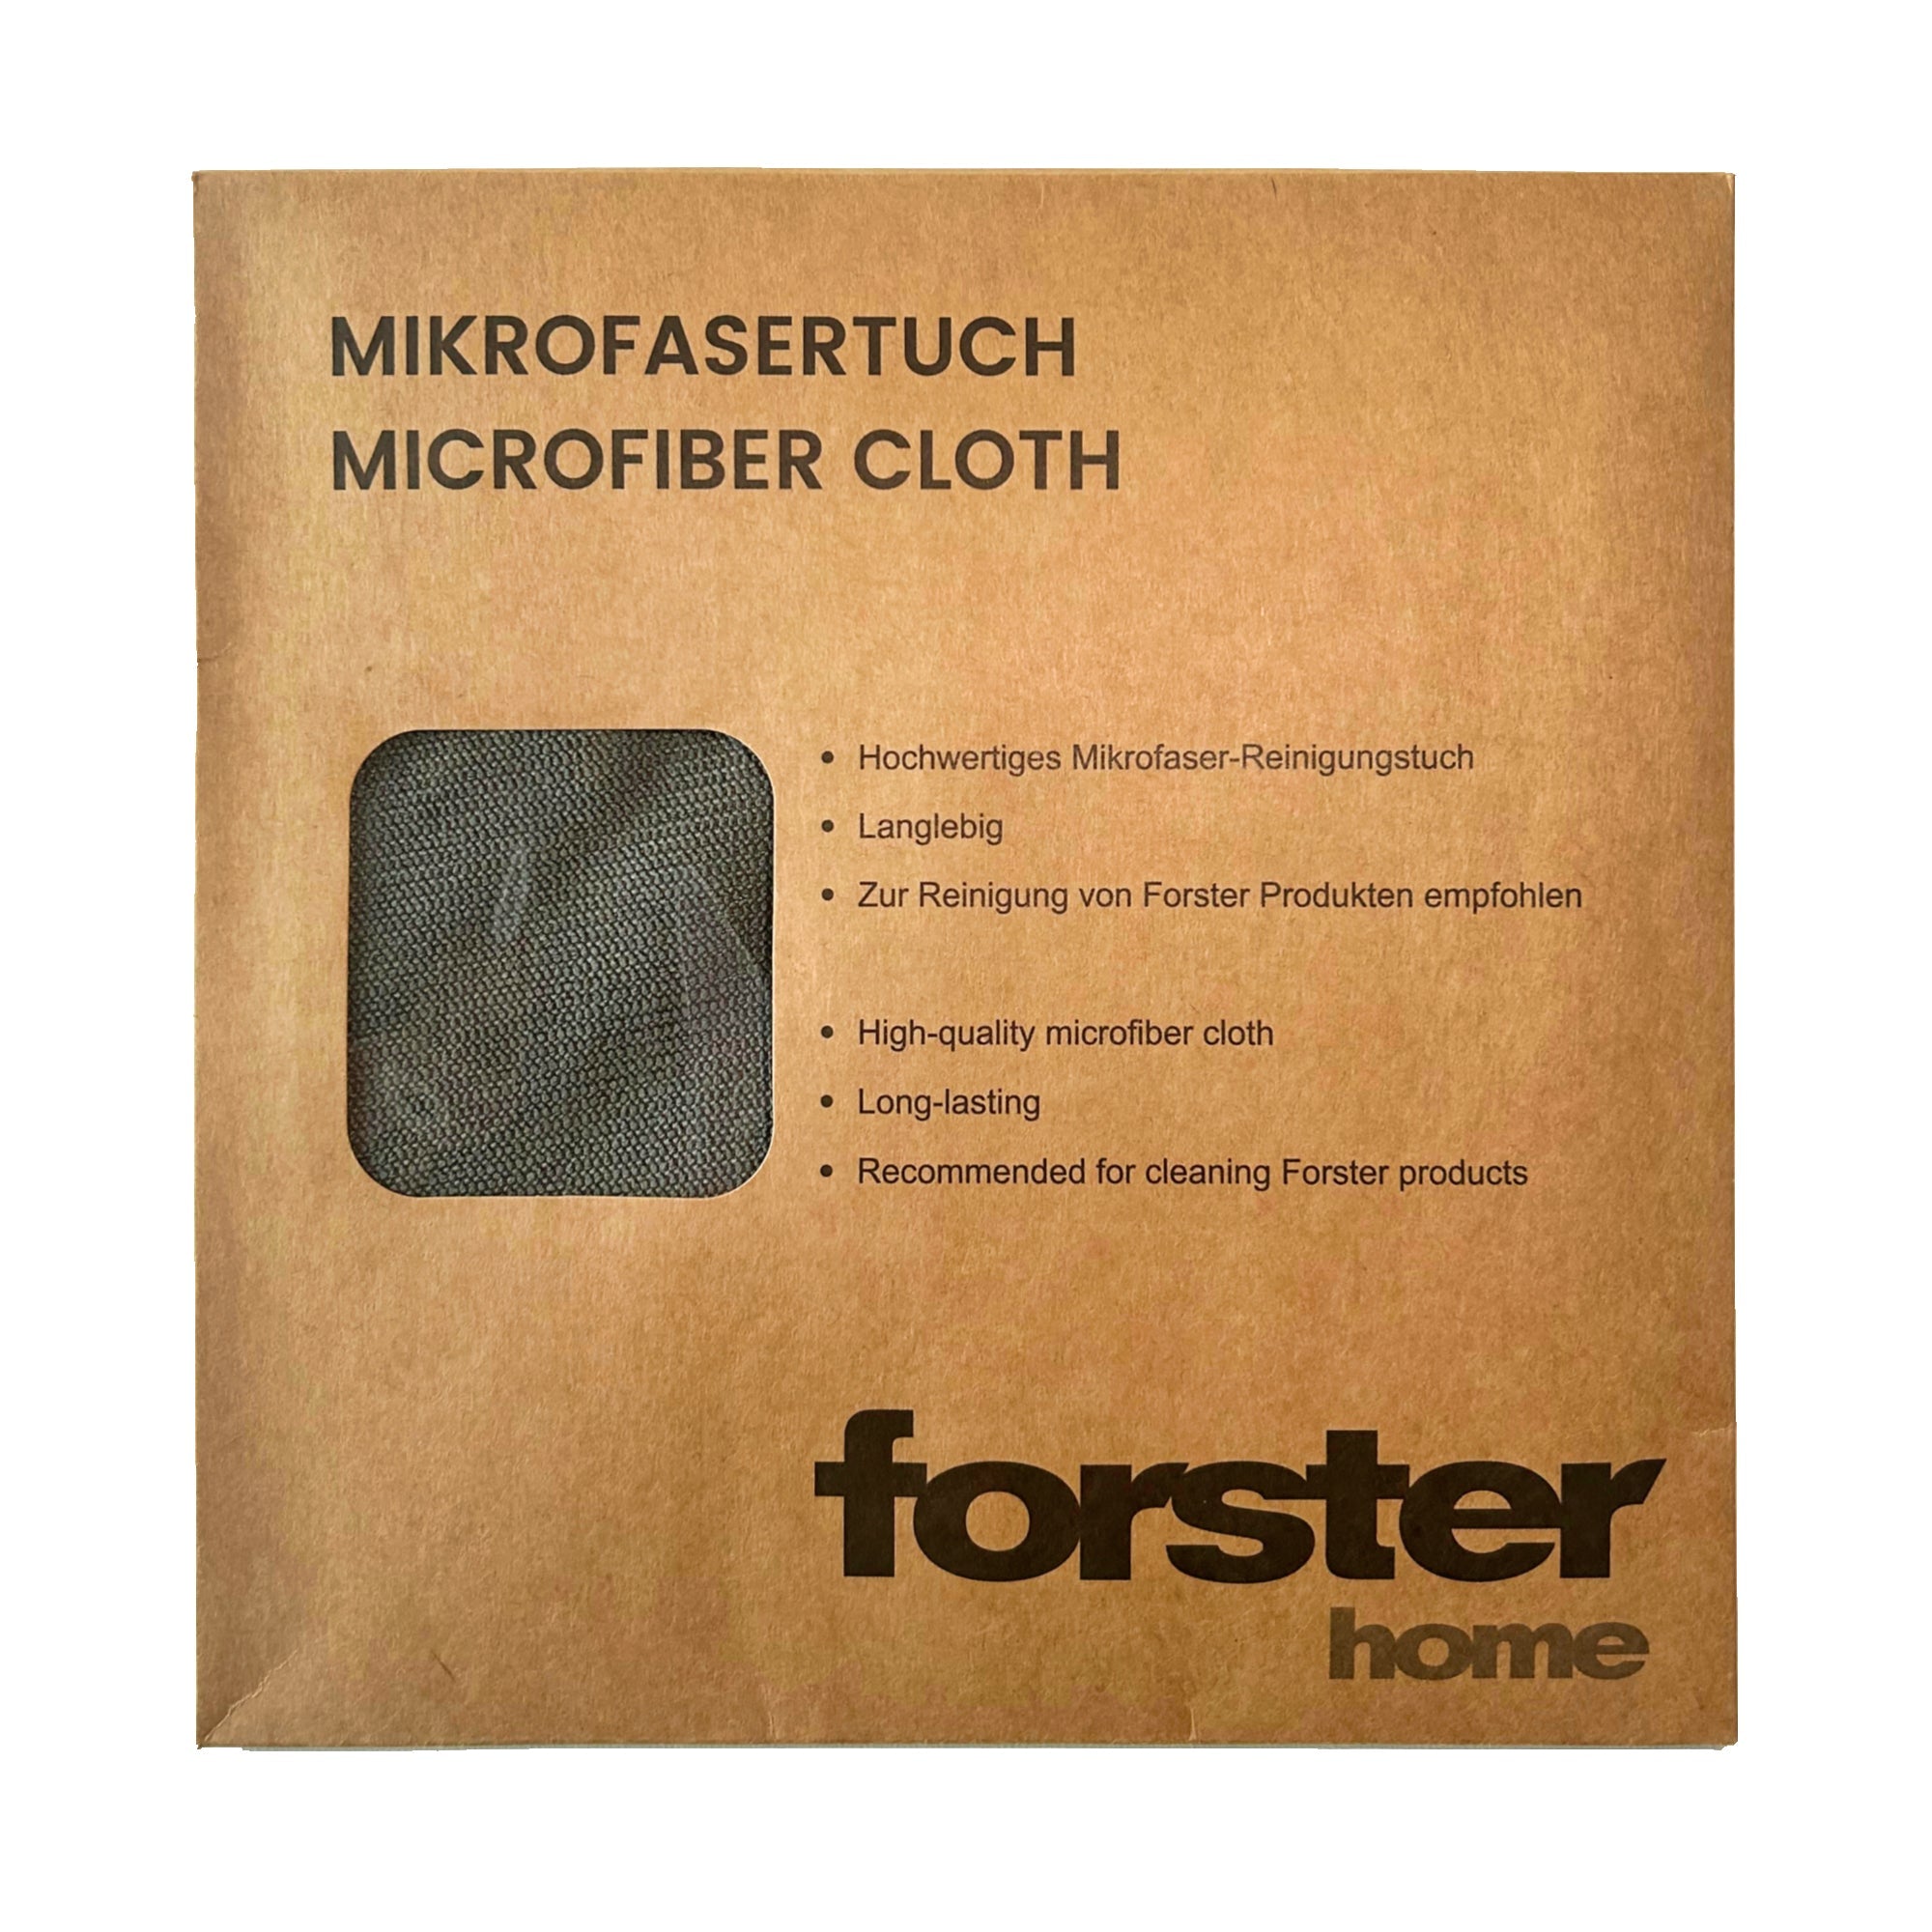 Mikrofasertuch Pro - Forster Home